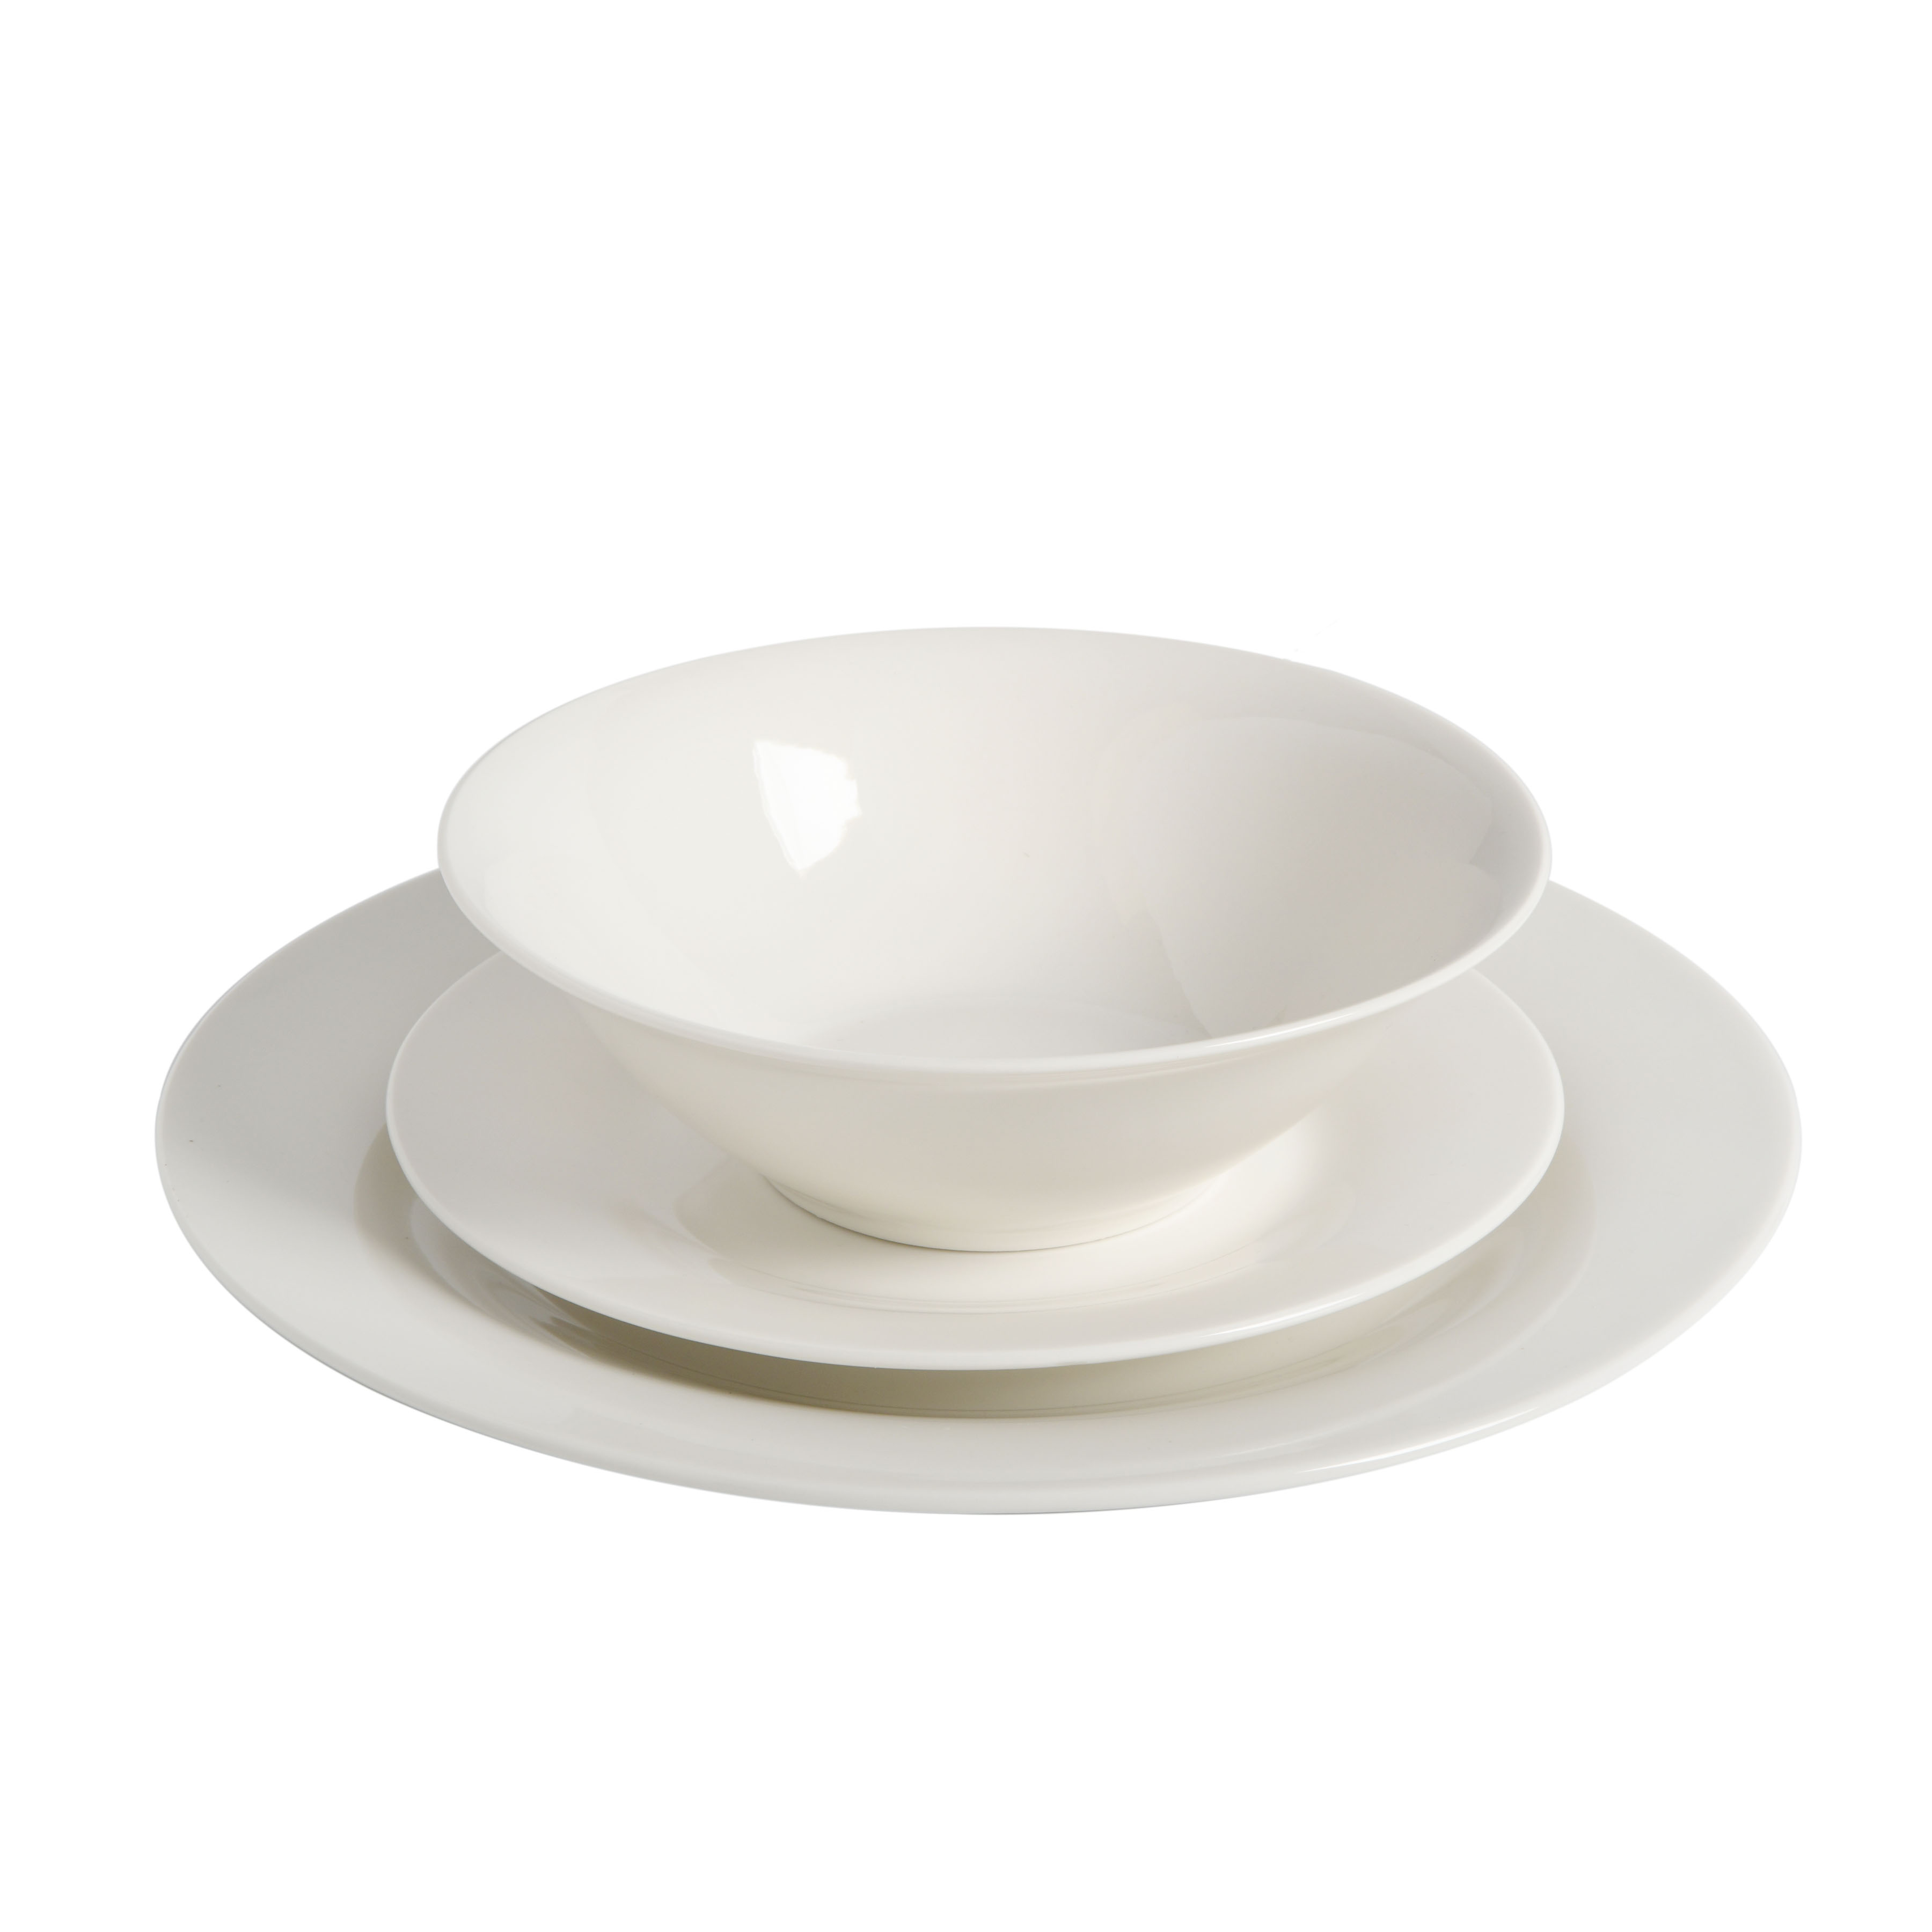 Gibson Home Everyday Round White Stoneware 12-Piece Dinnerware Set - image 3 of 10